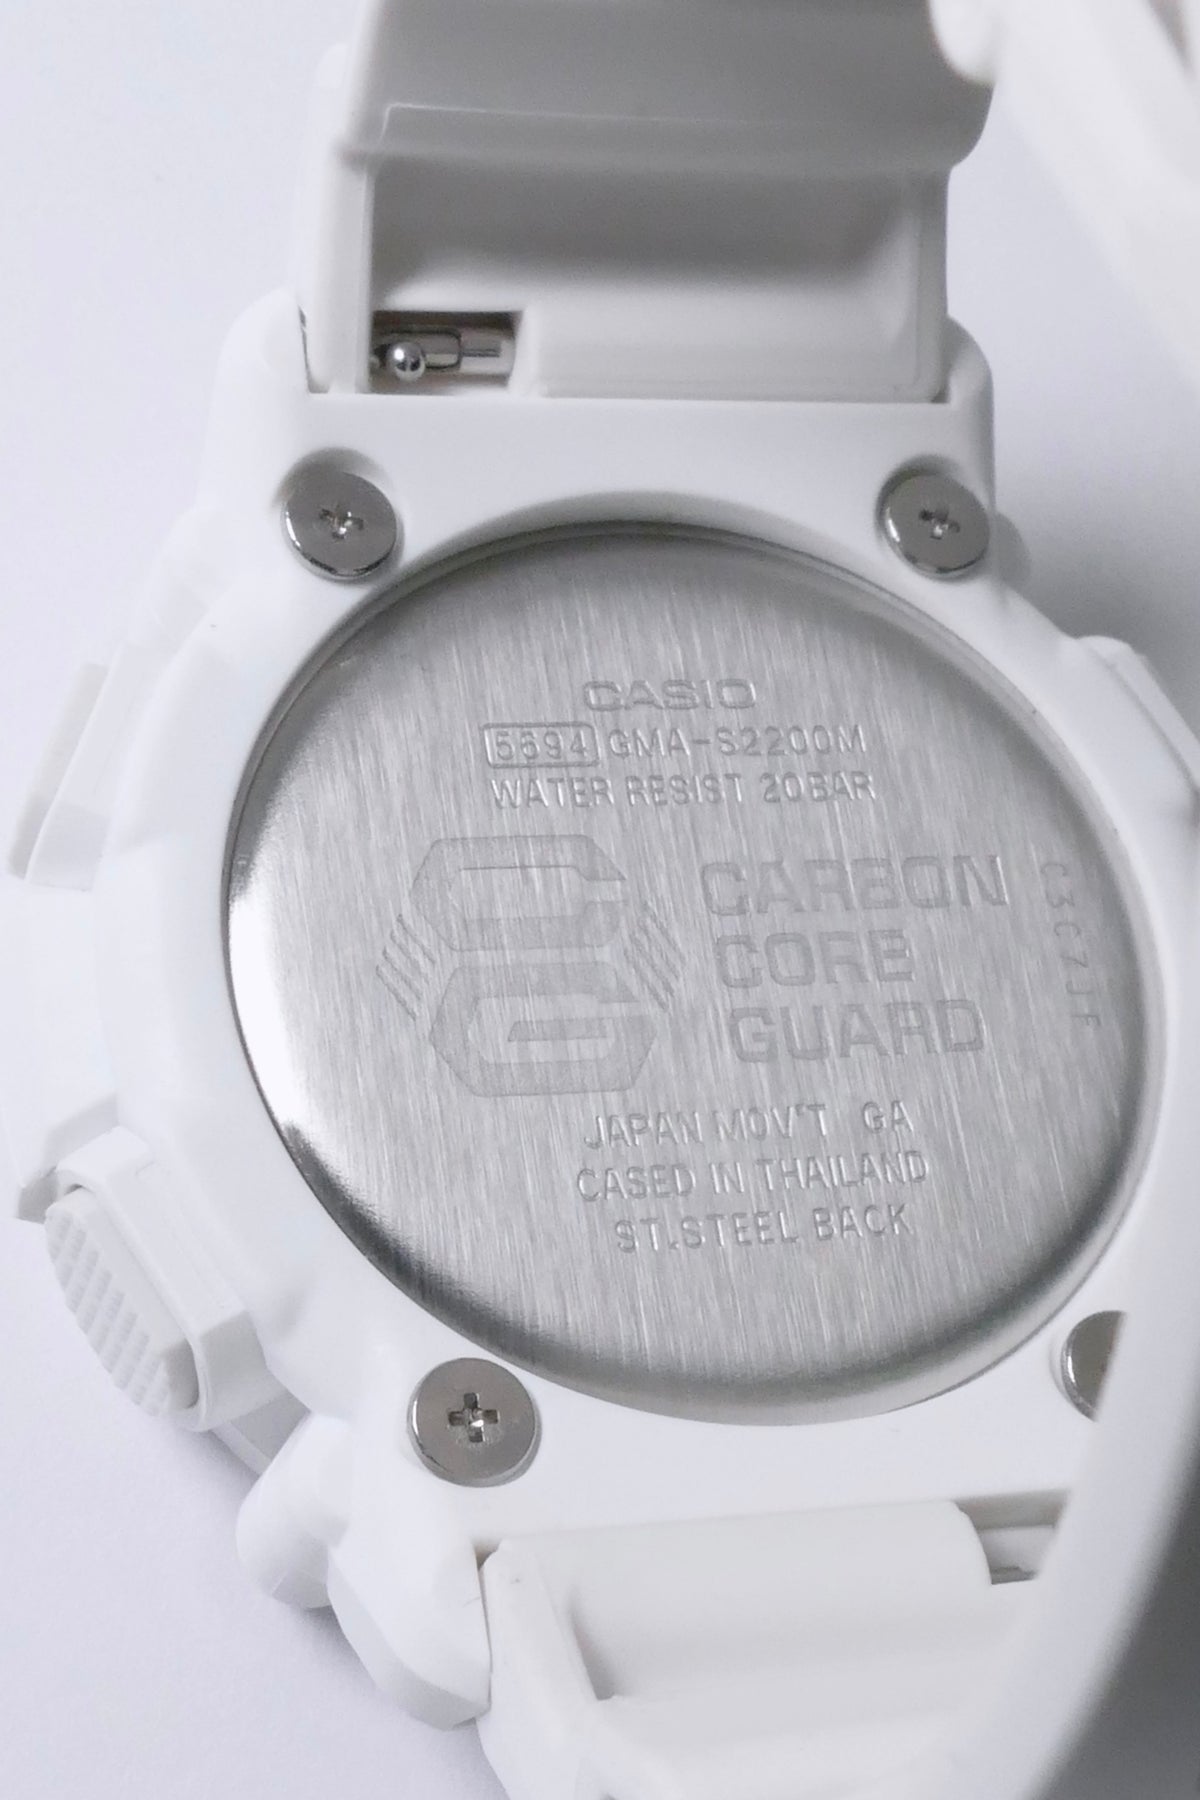 G-Shock GMA-S2200M-7A Watch - White